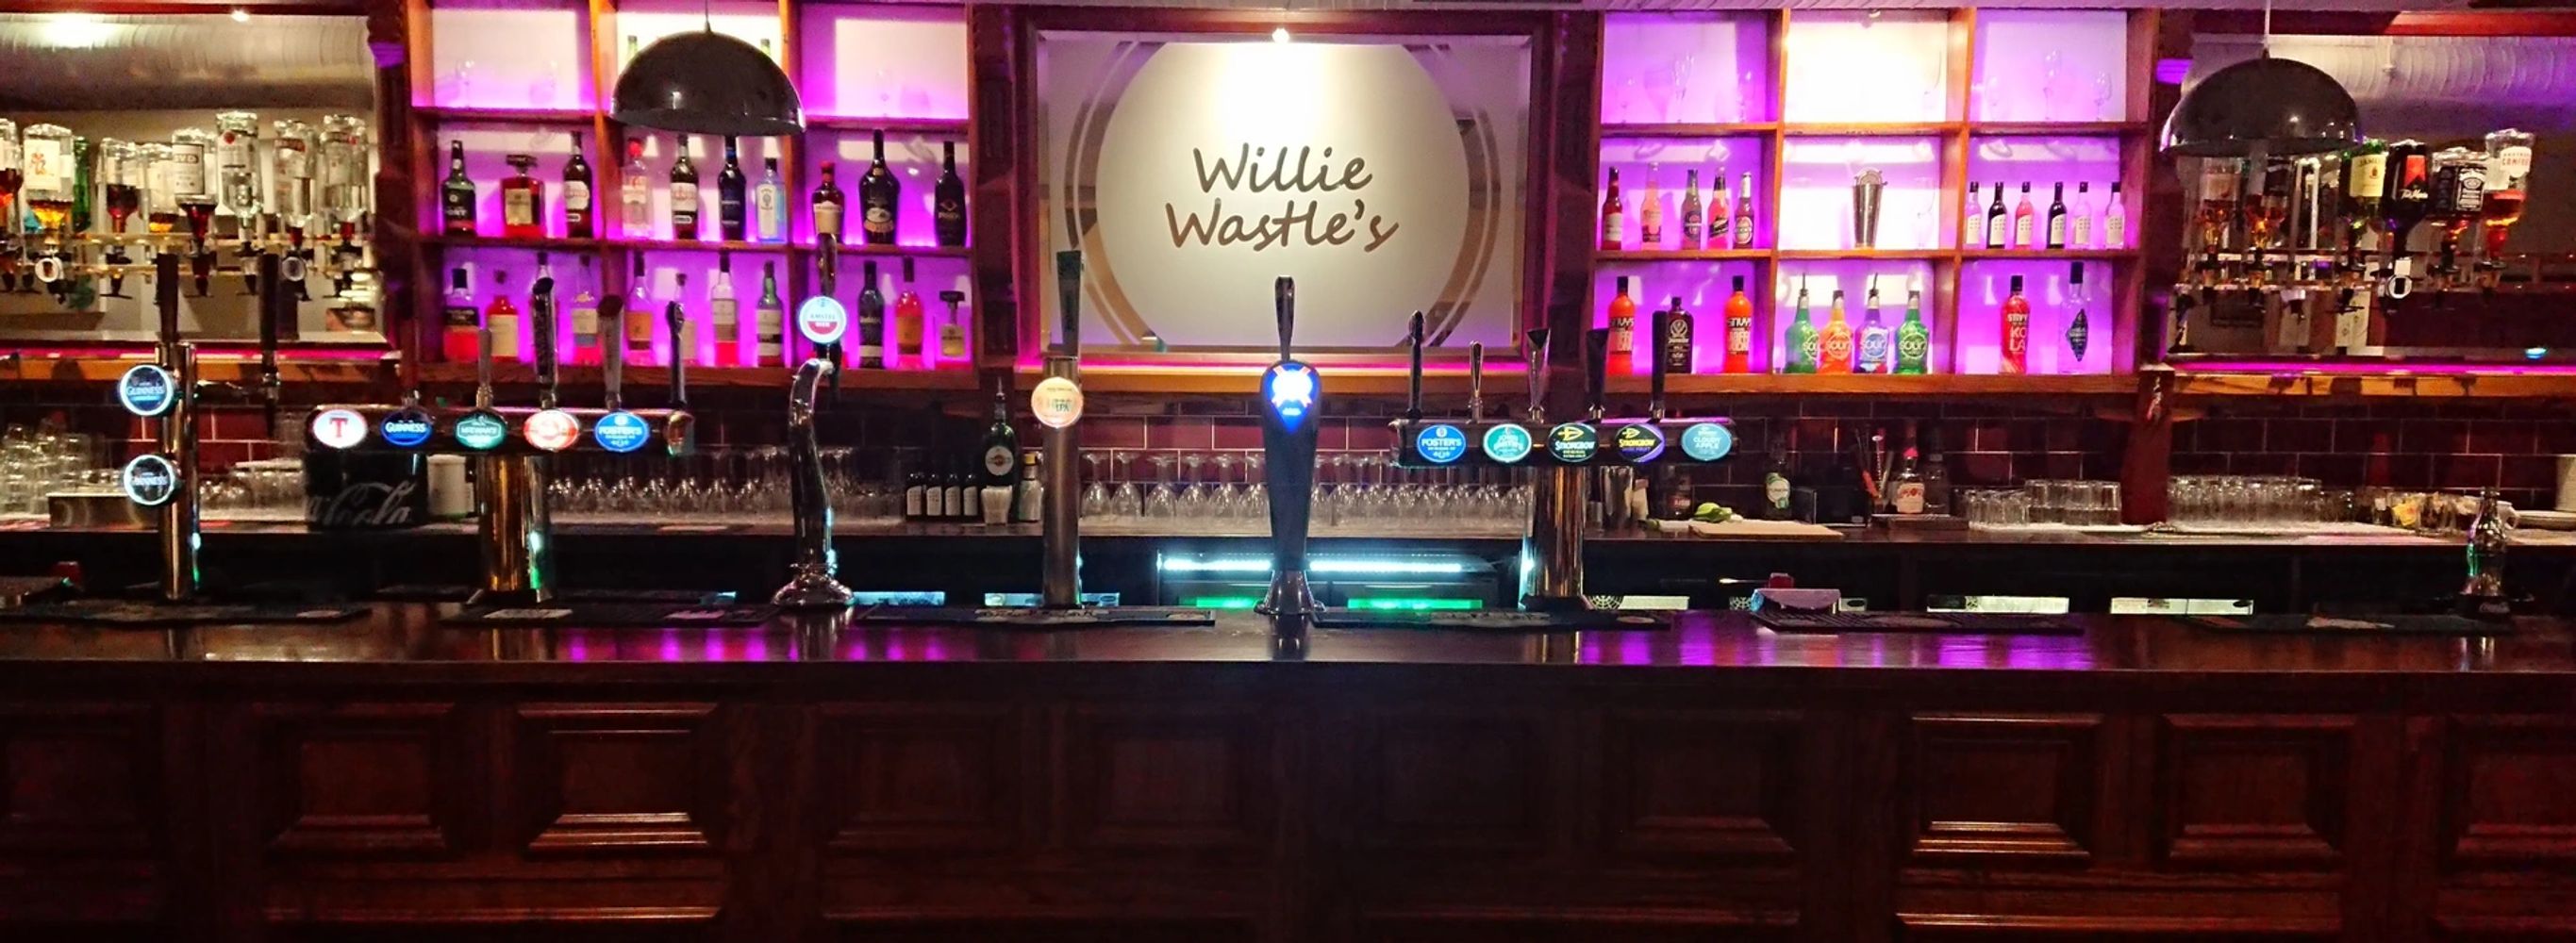 Willie Wastle's Bar